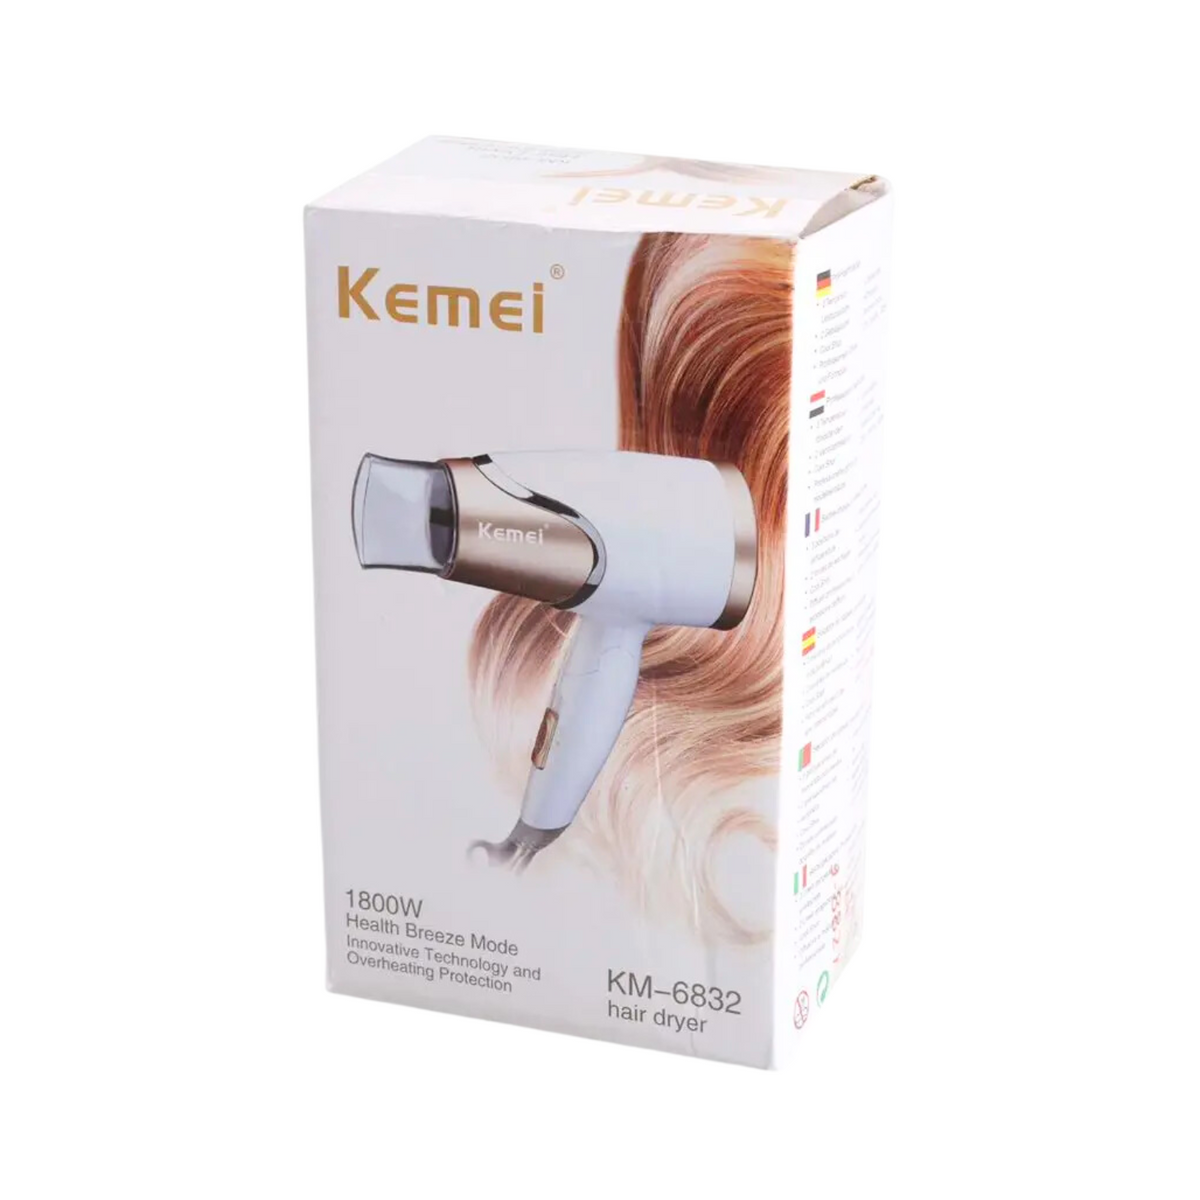 kemei-hair-dryer-km-6832-foldable-hair-dryer